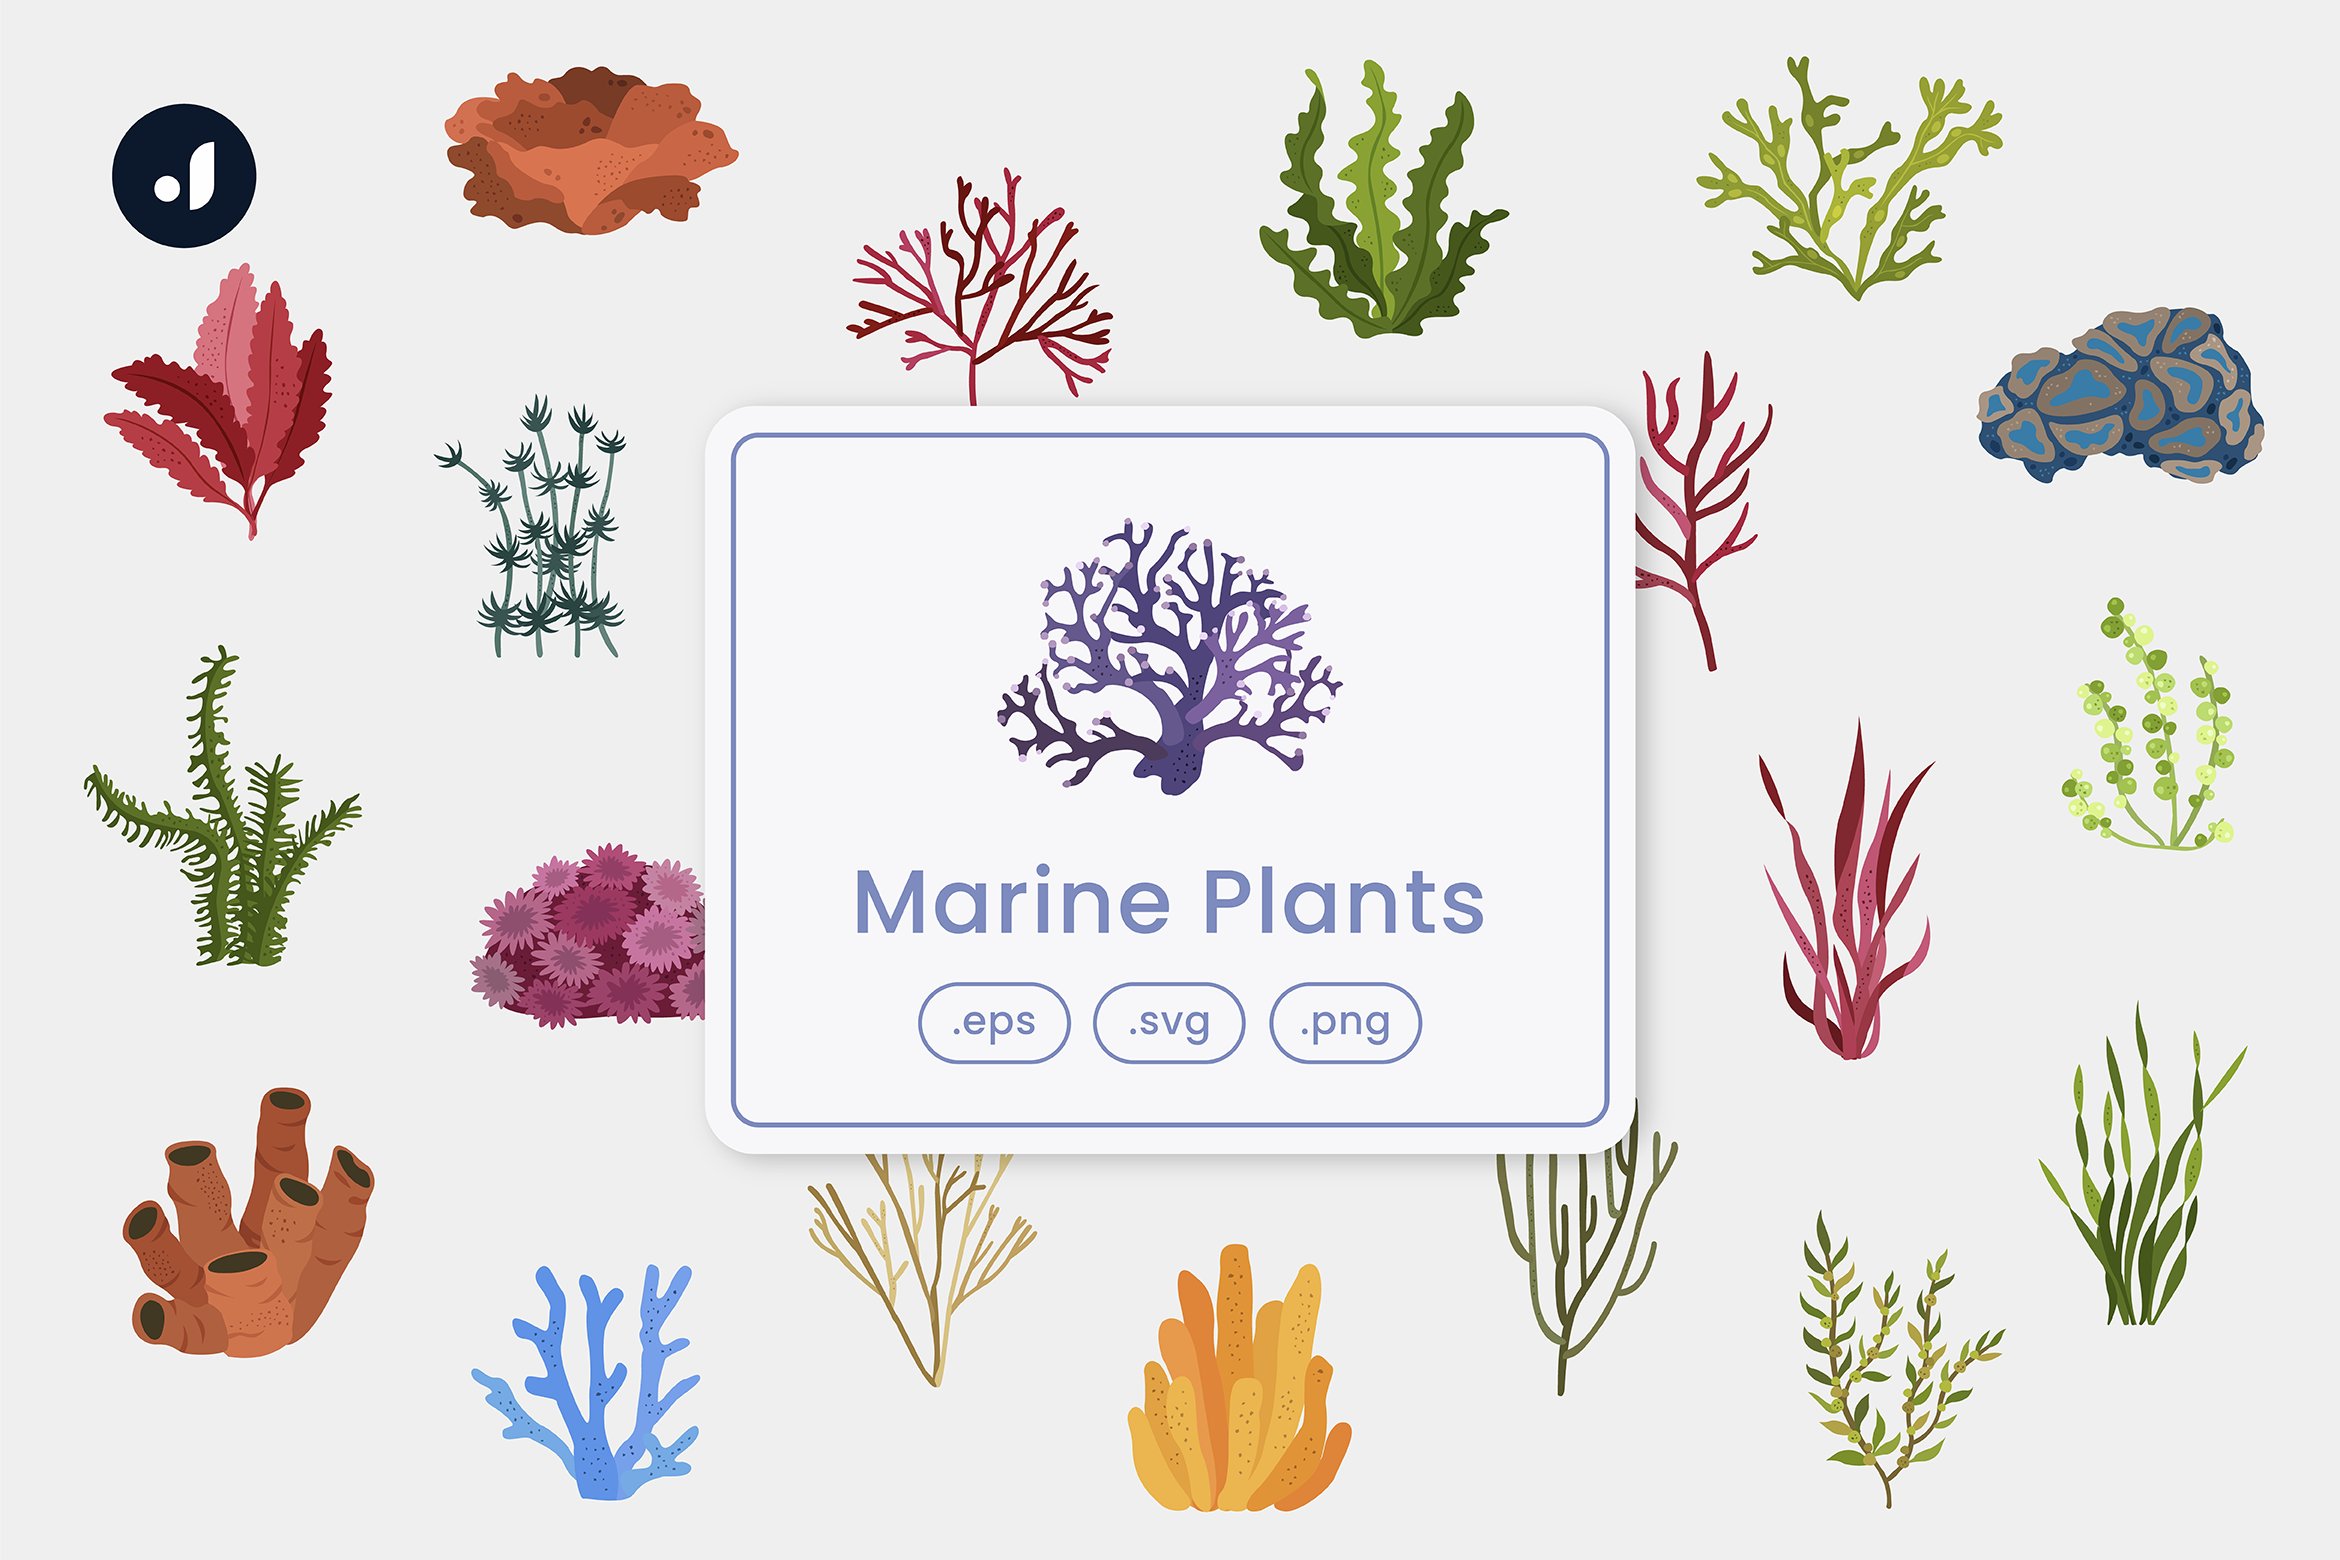 Marine Plants Illustration cover image.